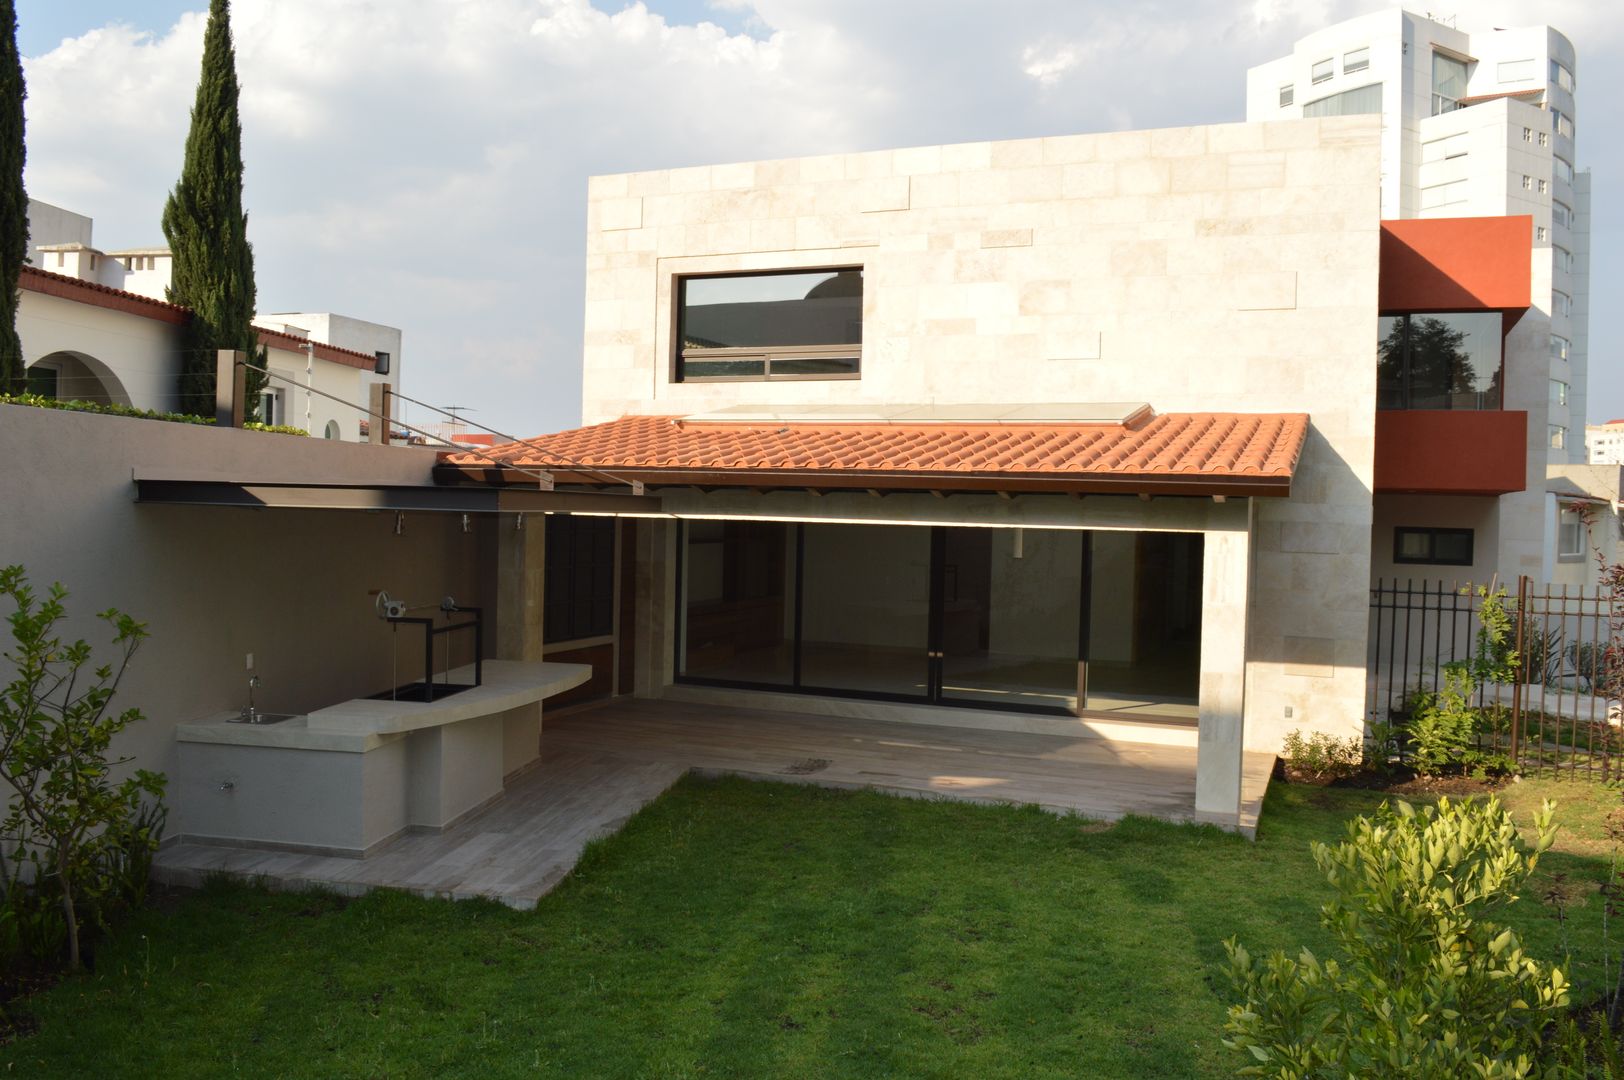 Casa en Interlomas, Revah Arqs Revah Arqs Moderne balkons, veranda's en terrassen